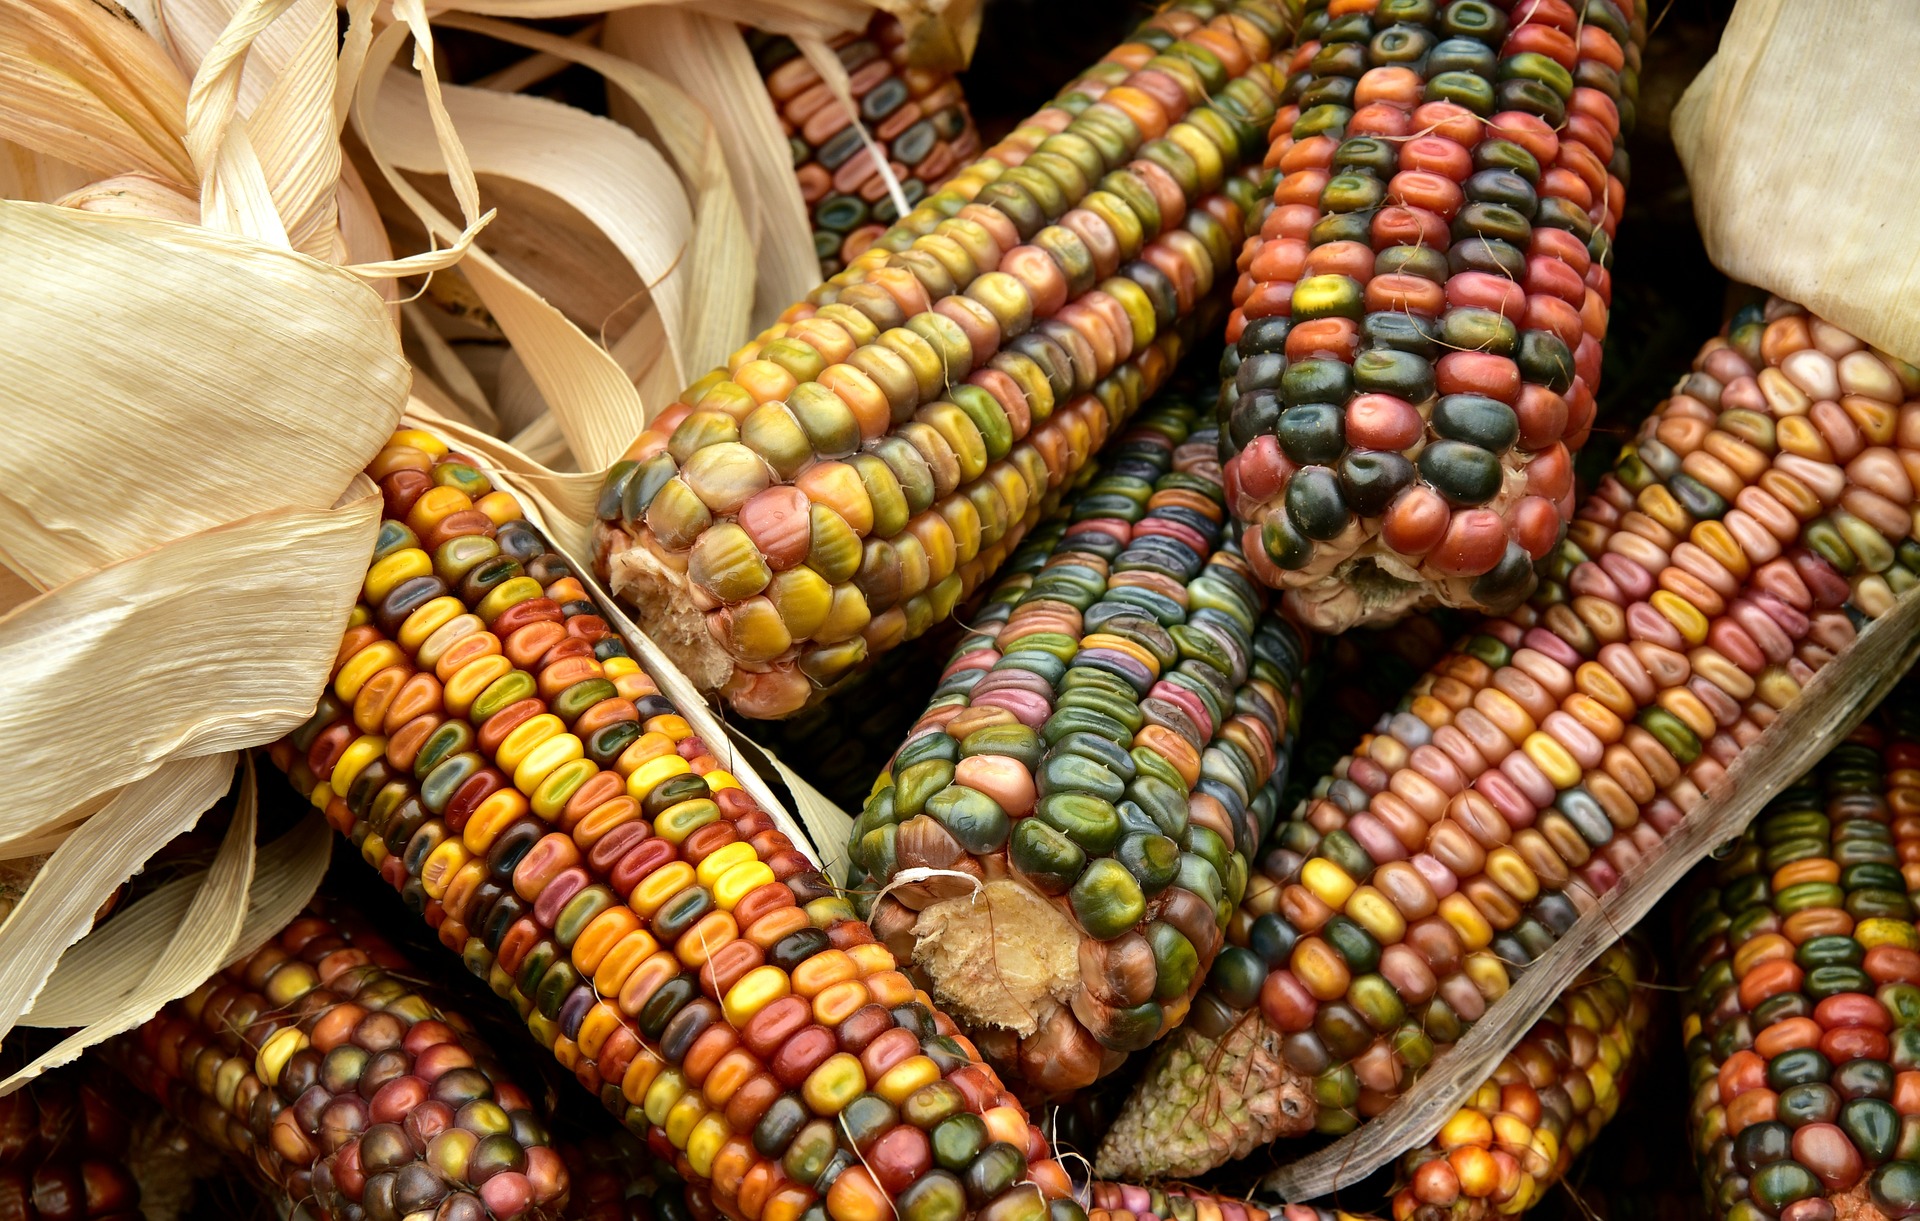 Cobs of corn